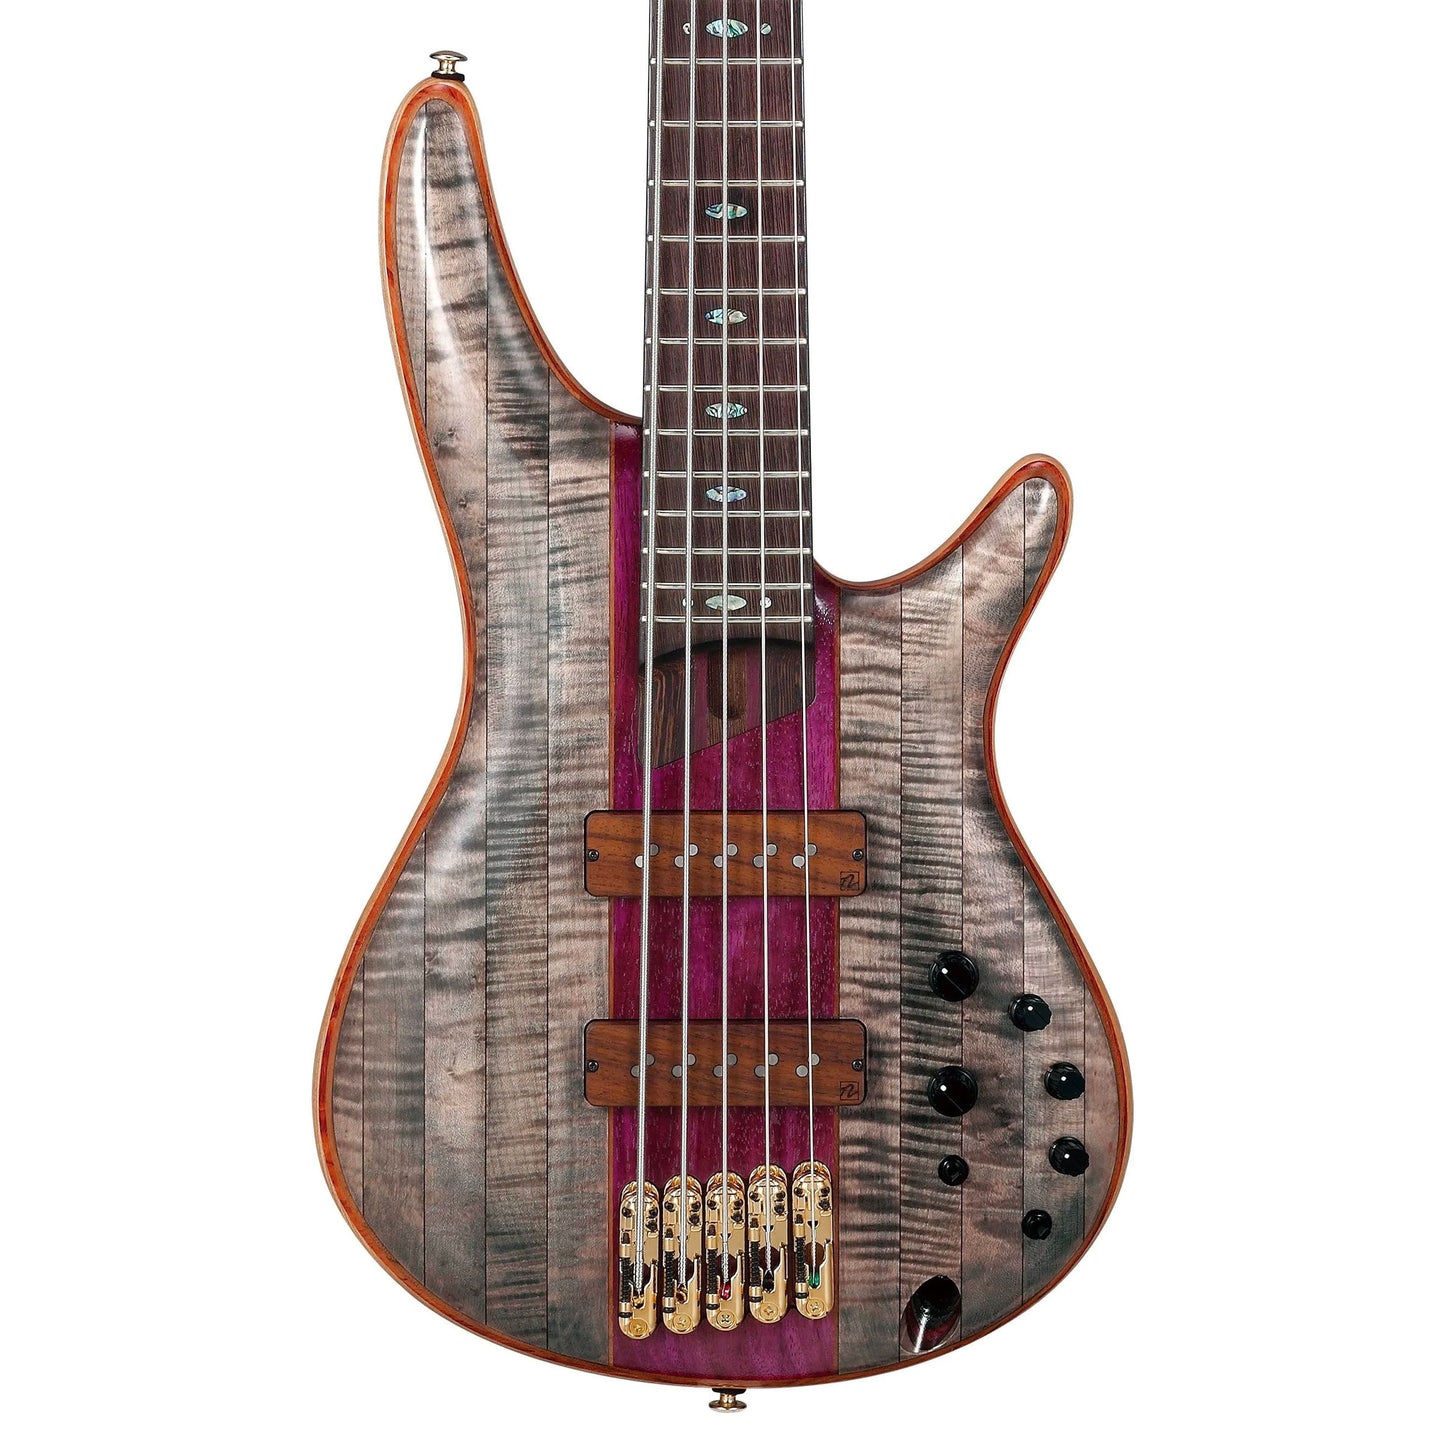 Ibanez SR5CMDXBIL 5 String RH Electric Bass